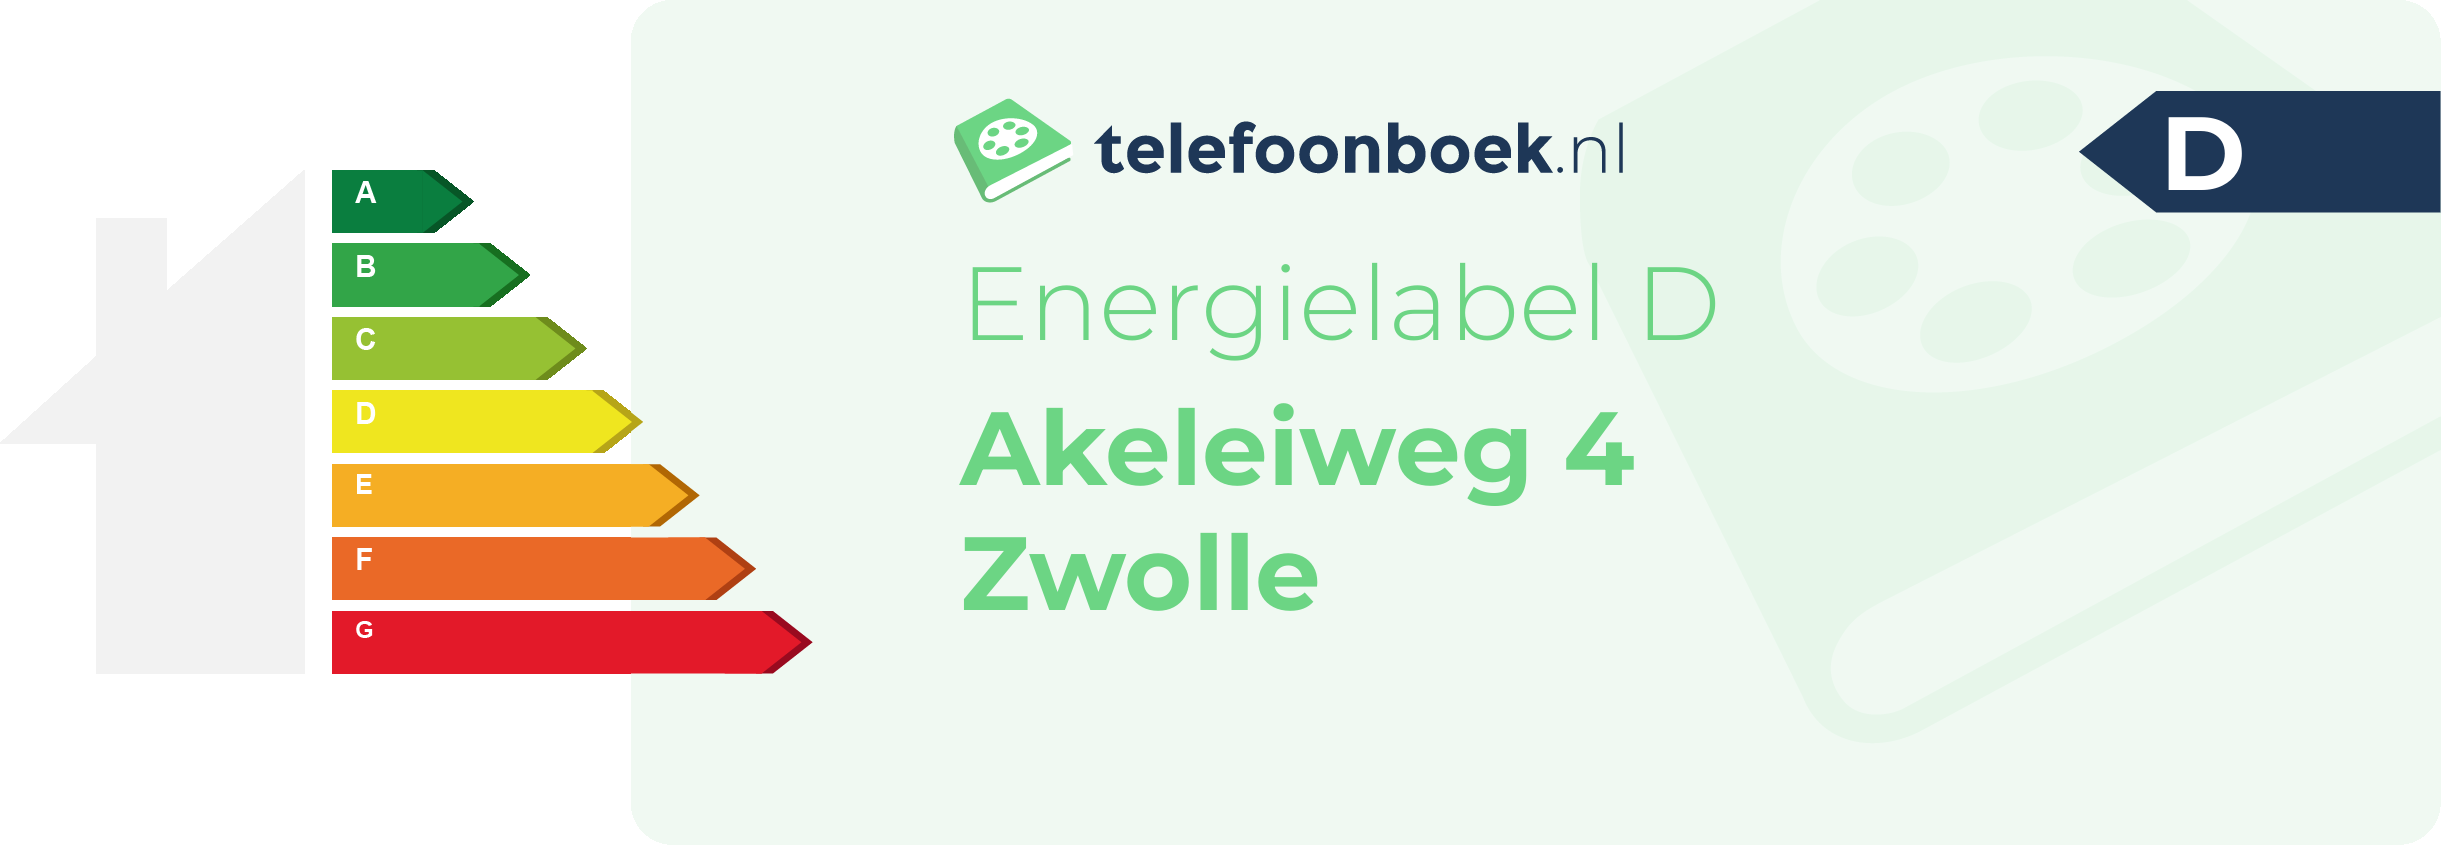 Energielabel Akeleiweg 4 Zwolle